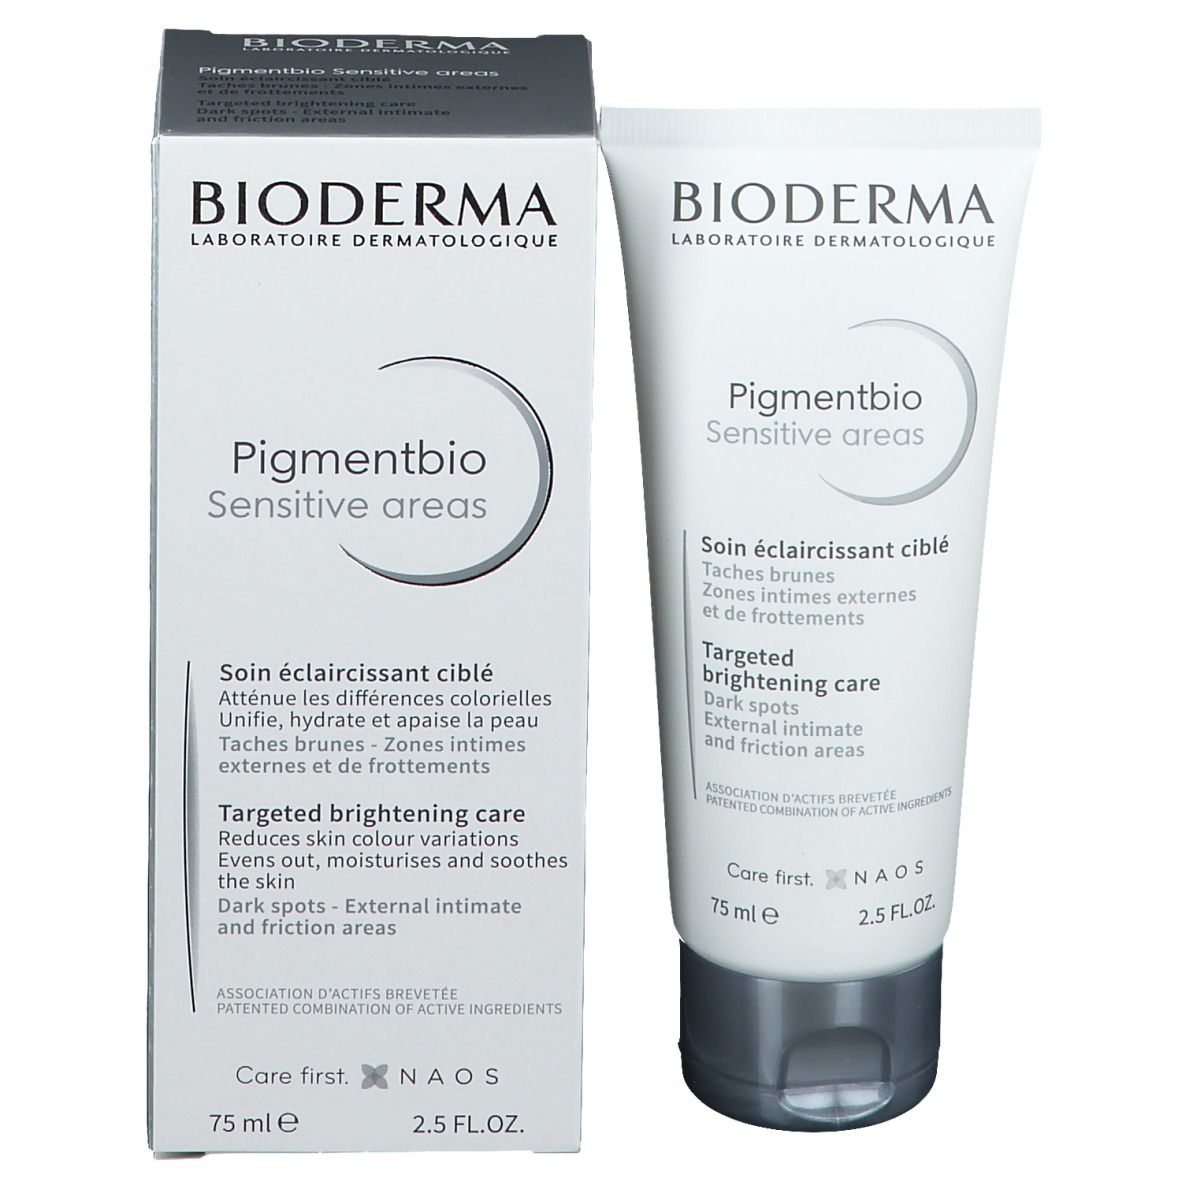 BIODERMA Pigmentbio Sensitive Areas - shop-pharmacie.fr